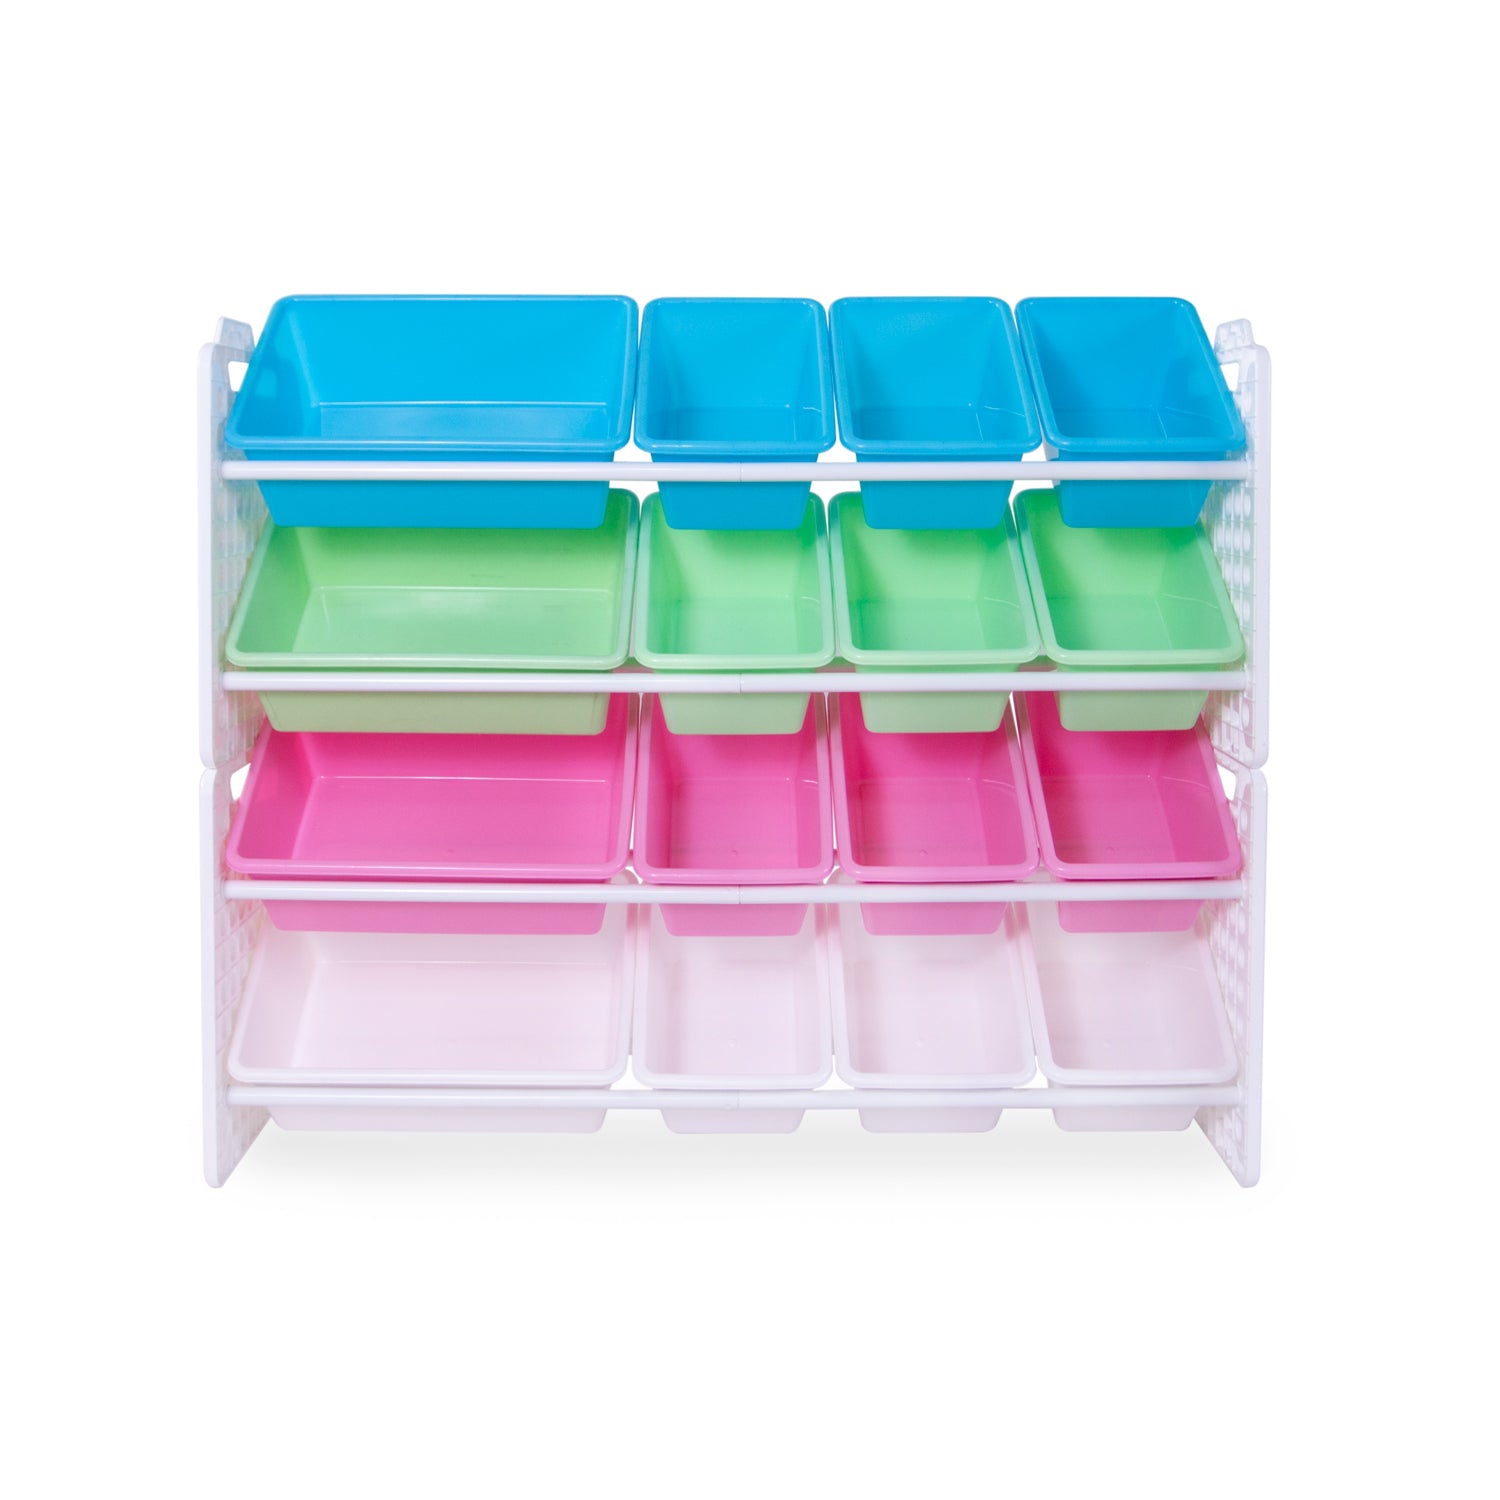 UNiPLAY 16 Bins Toy Storage Organizer - Pink (UB45731)